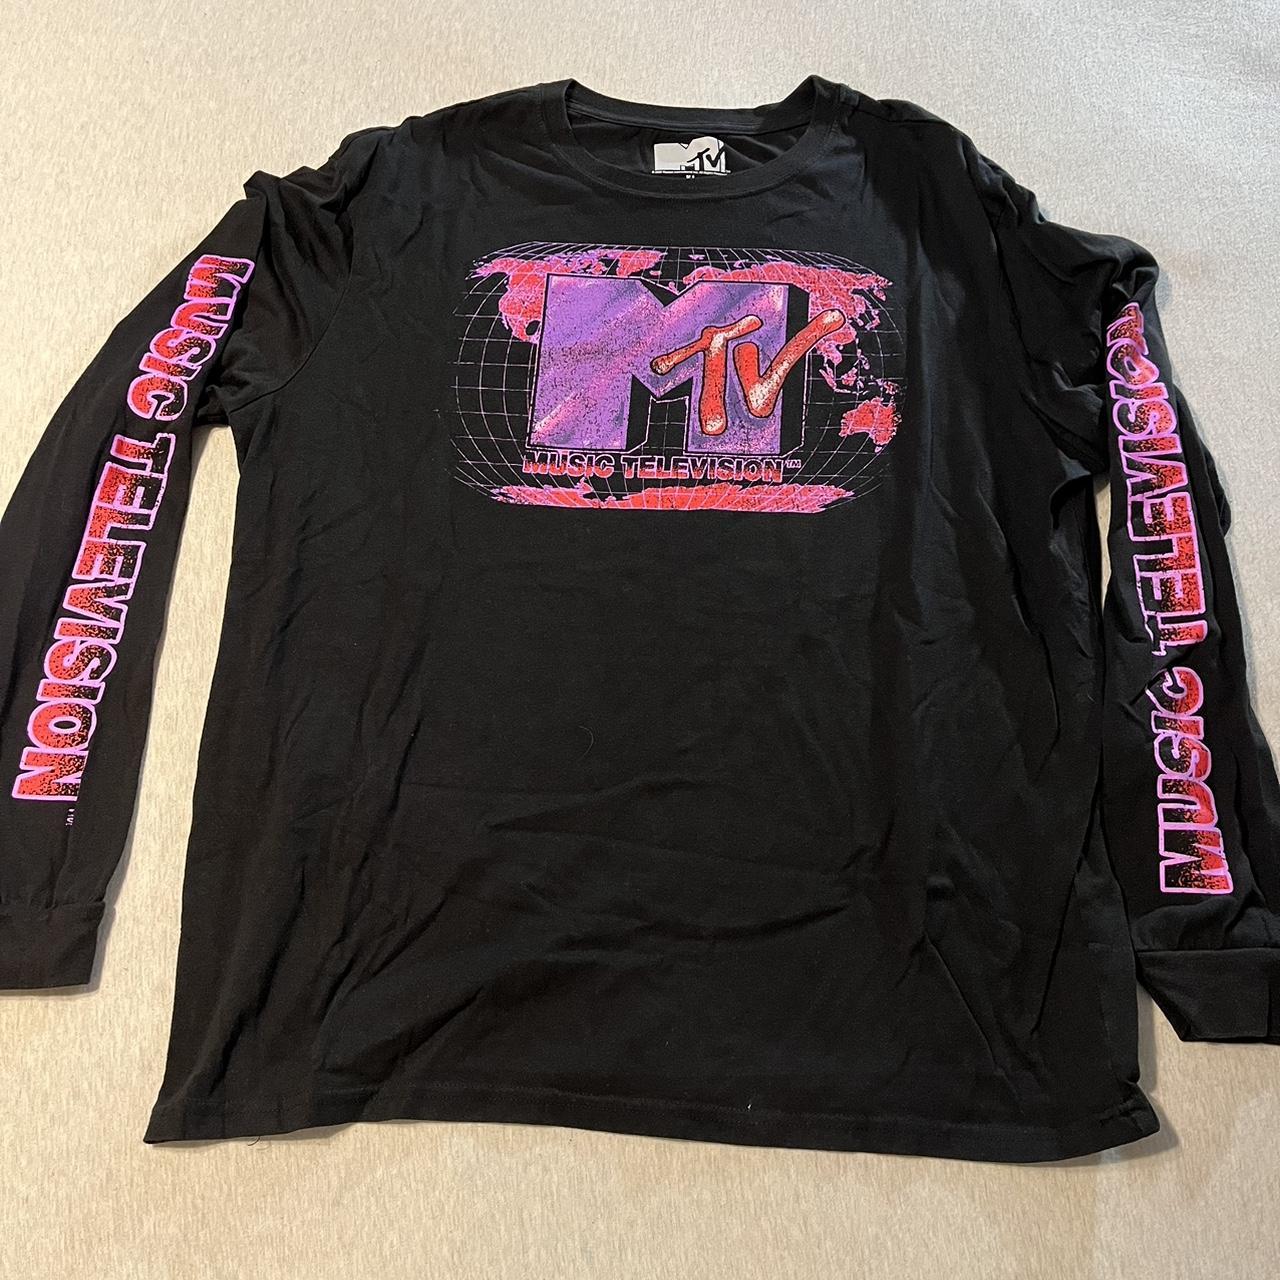 MTV Black/Pink Long-Sleeve Graphic Shirt Fits Men’s... - Depop